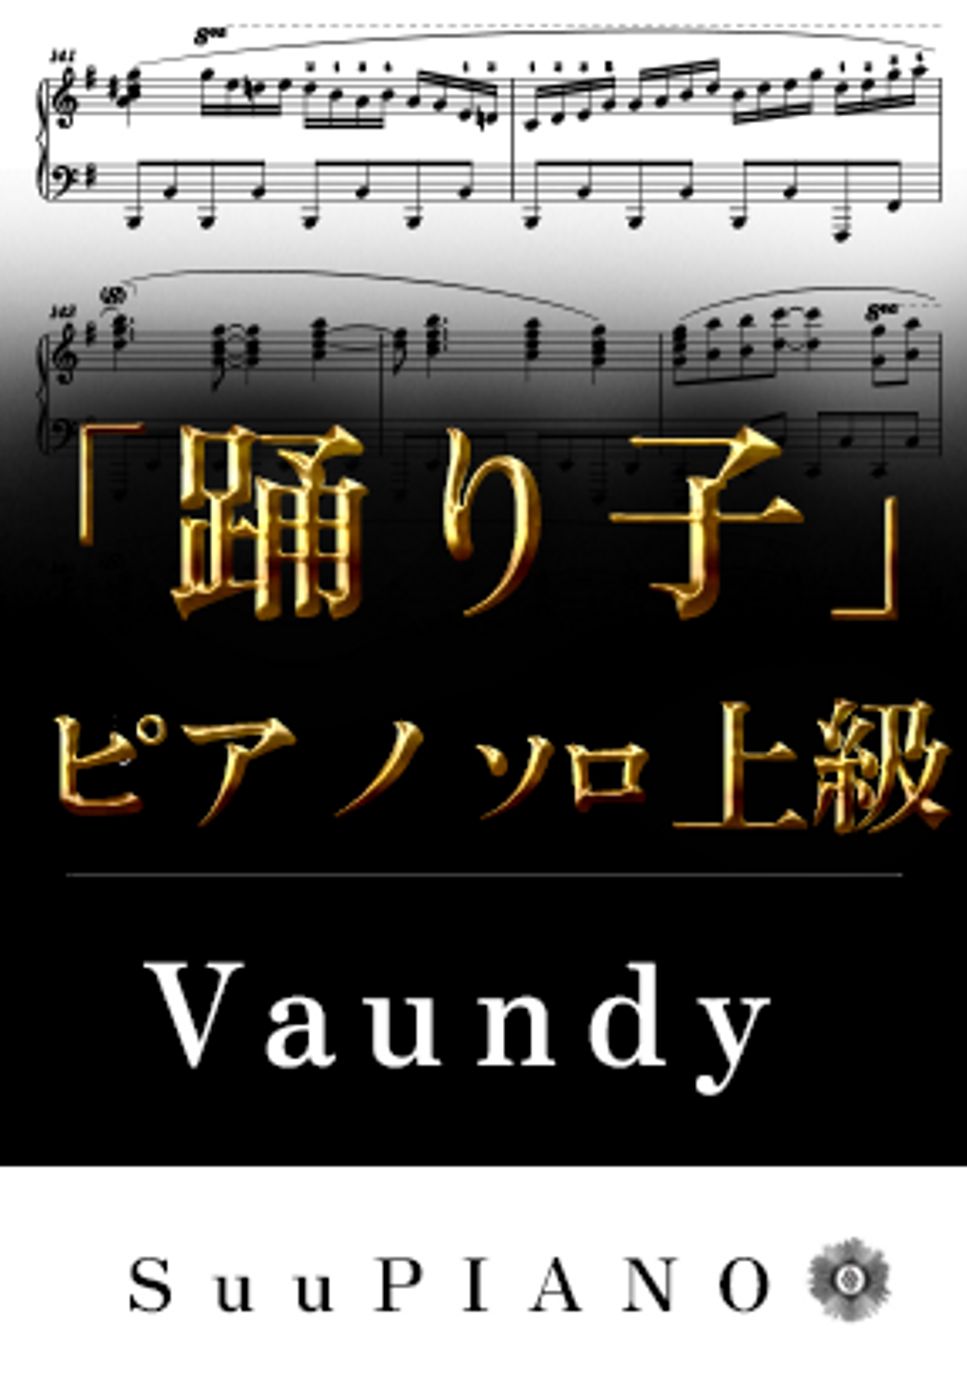 Ado - 唱 (ピアノ連弾上級  /	  USJ『ハロウィーン・ホラー・ナイト』「ソンビ・デ・ダンス」テーマソング) by Suu